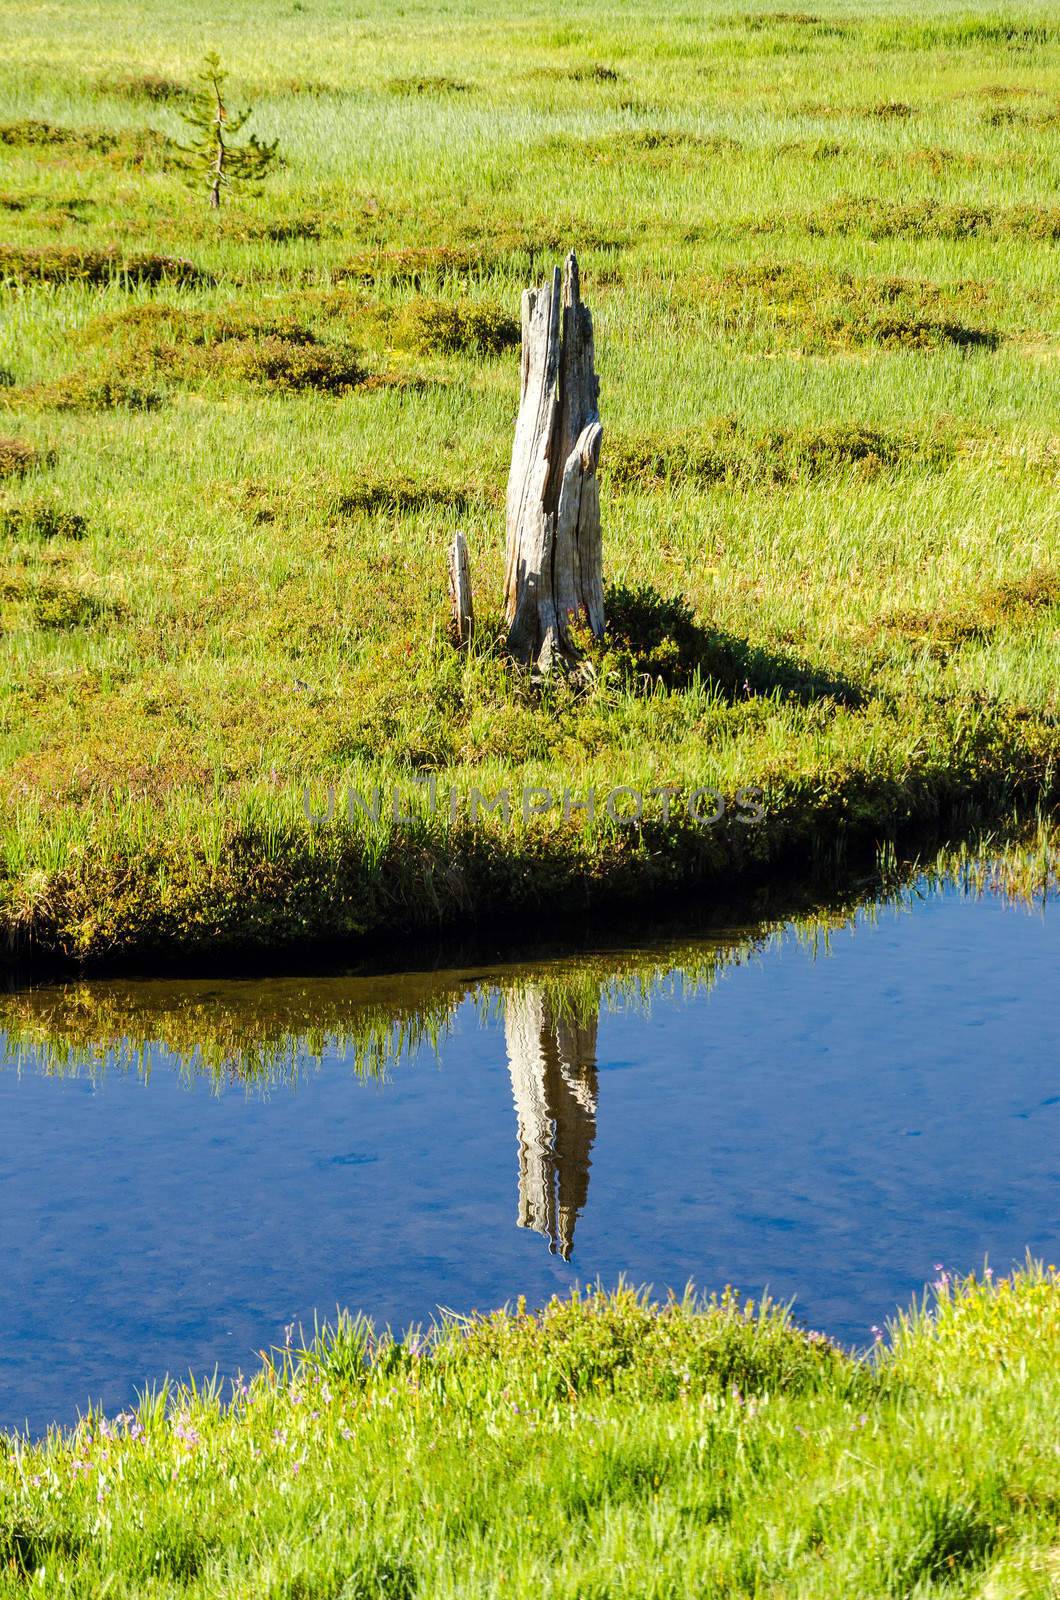 Tree Stump Reflection by jkraft5